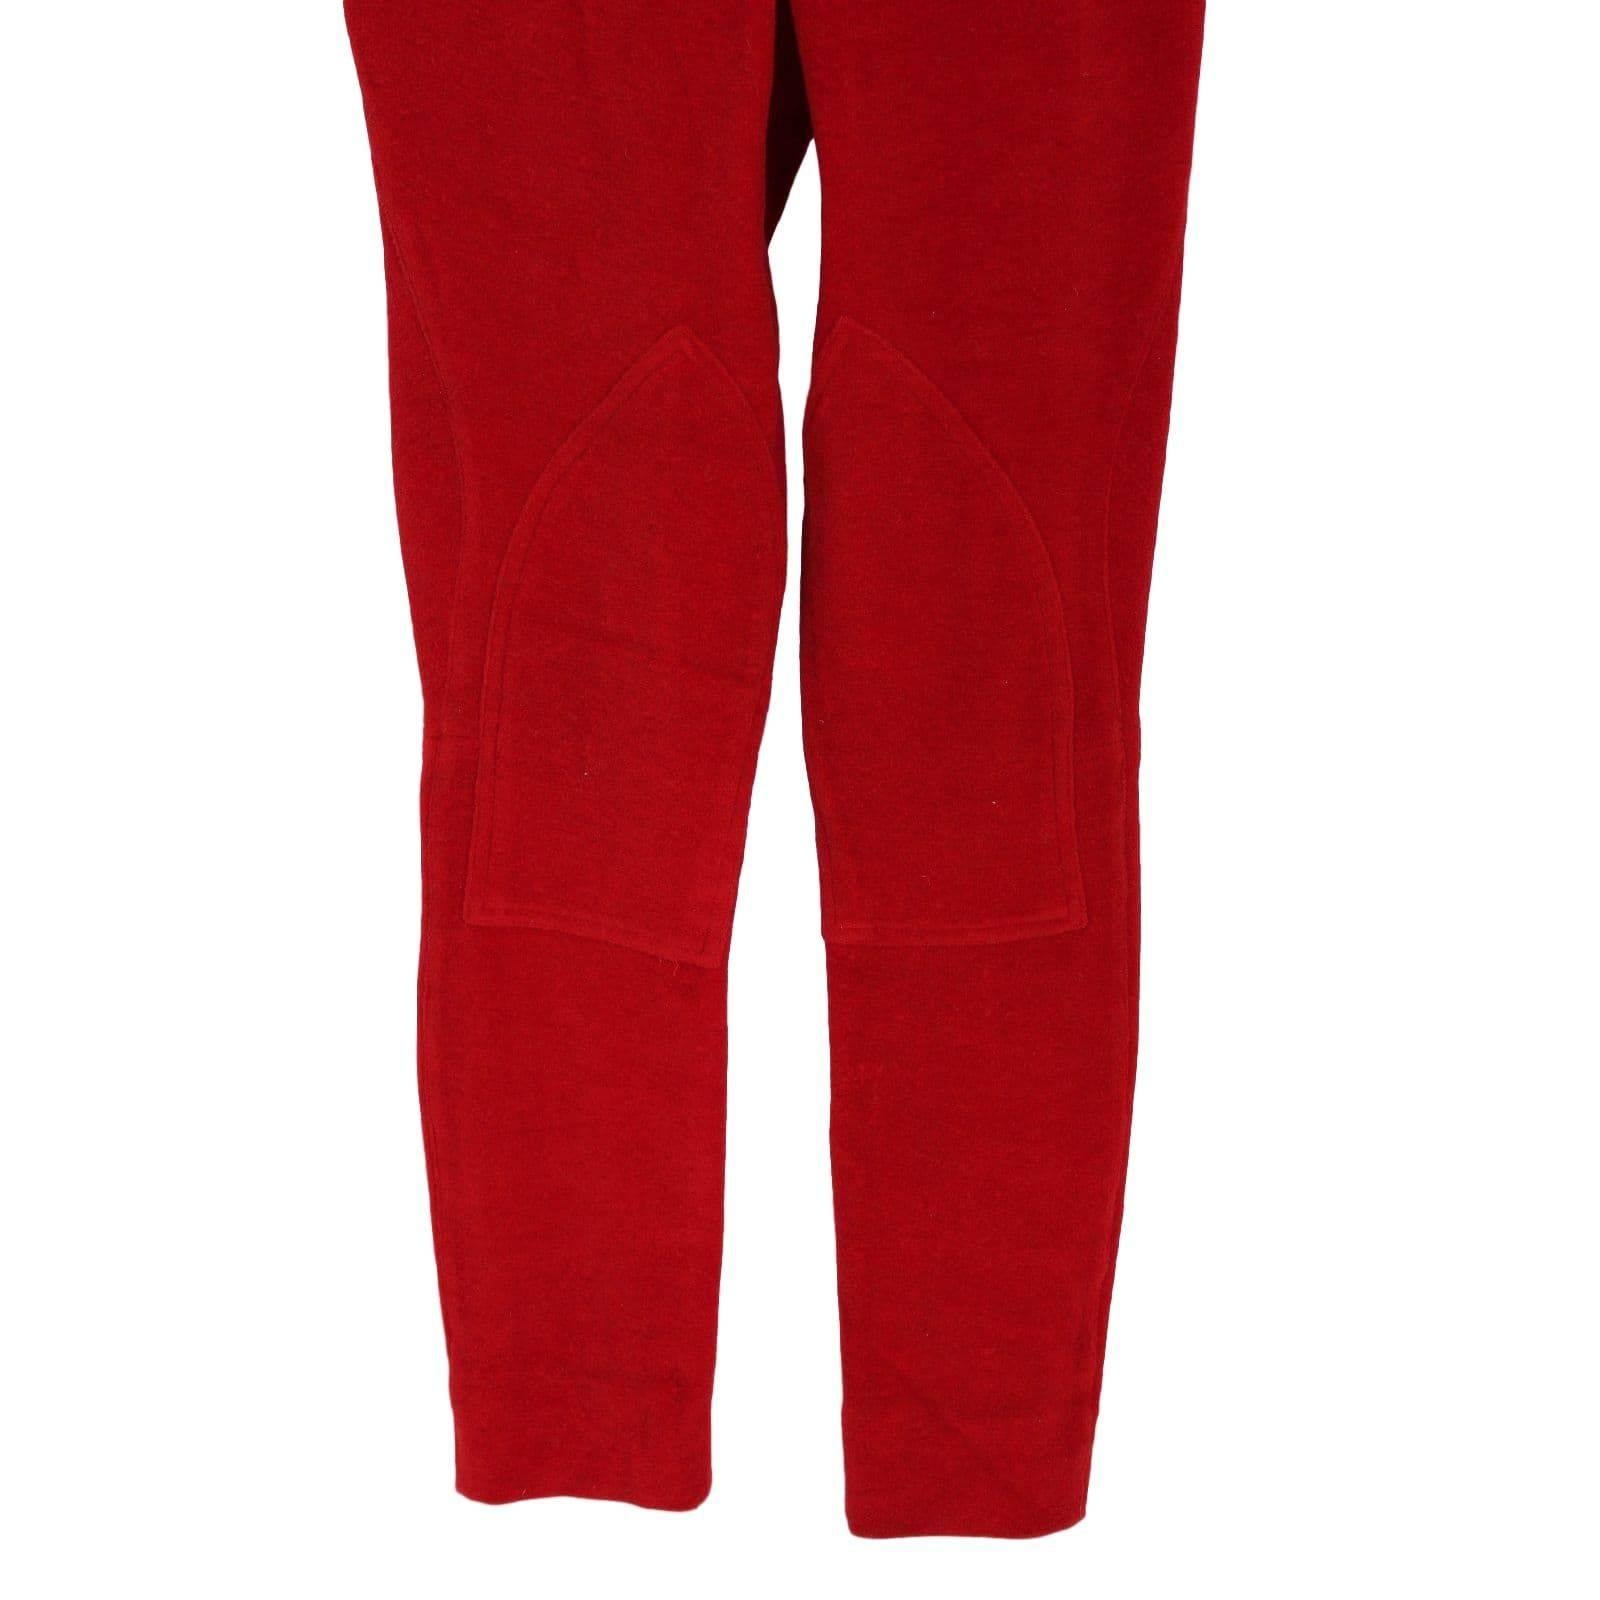 Vivienne Westwood red horse model trousers in cupro.
Size 42 (IT)

Measures:
Waist: 32 cm
Length: 100 cm
Hem: 13 cm

Composition: cupro
Color: red
Condition: excellent vintage conditions